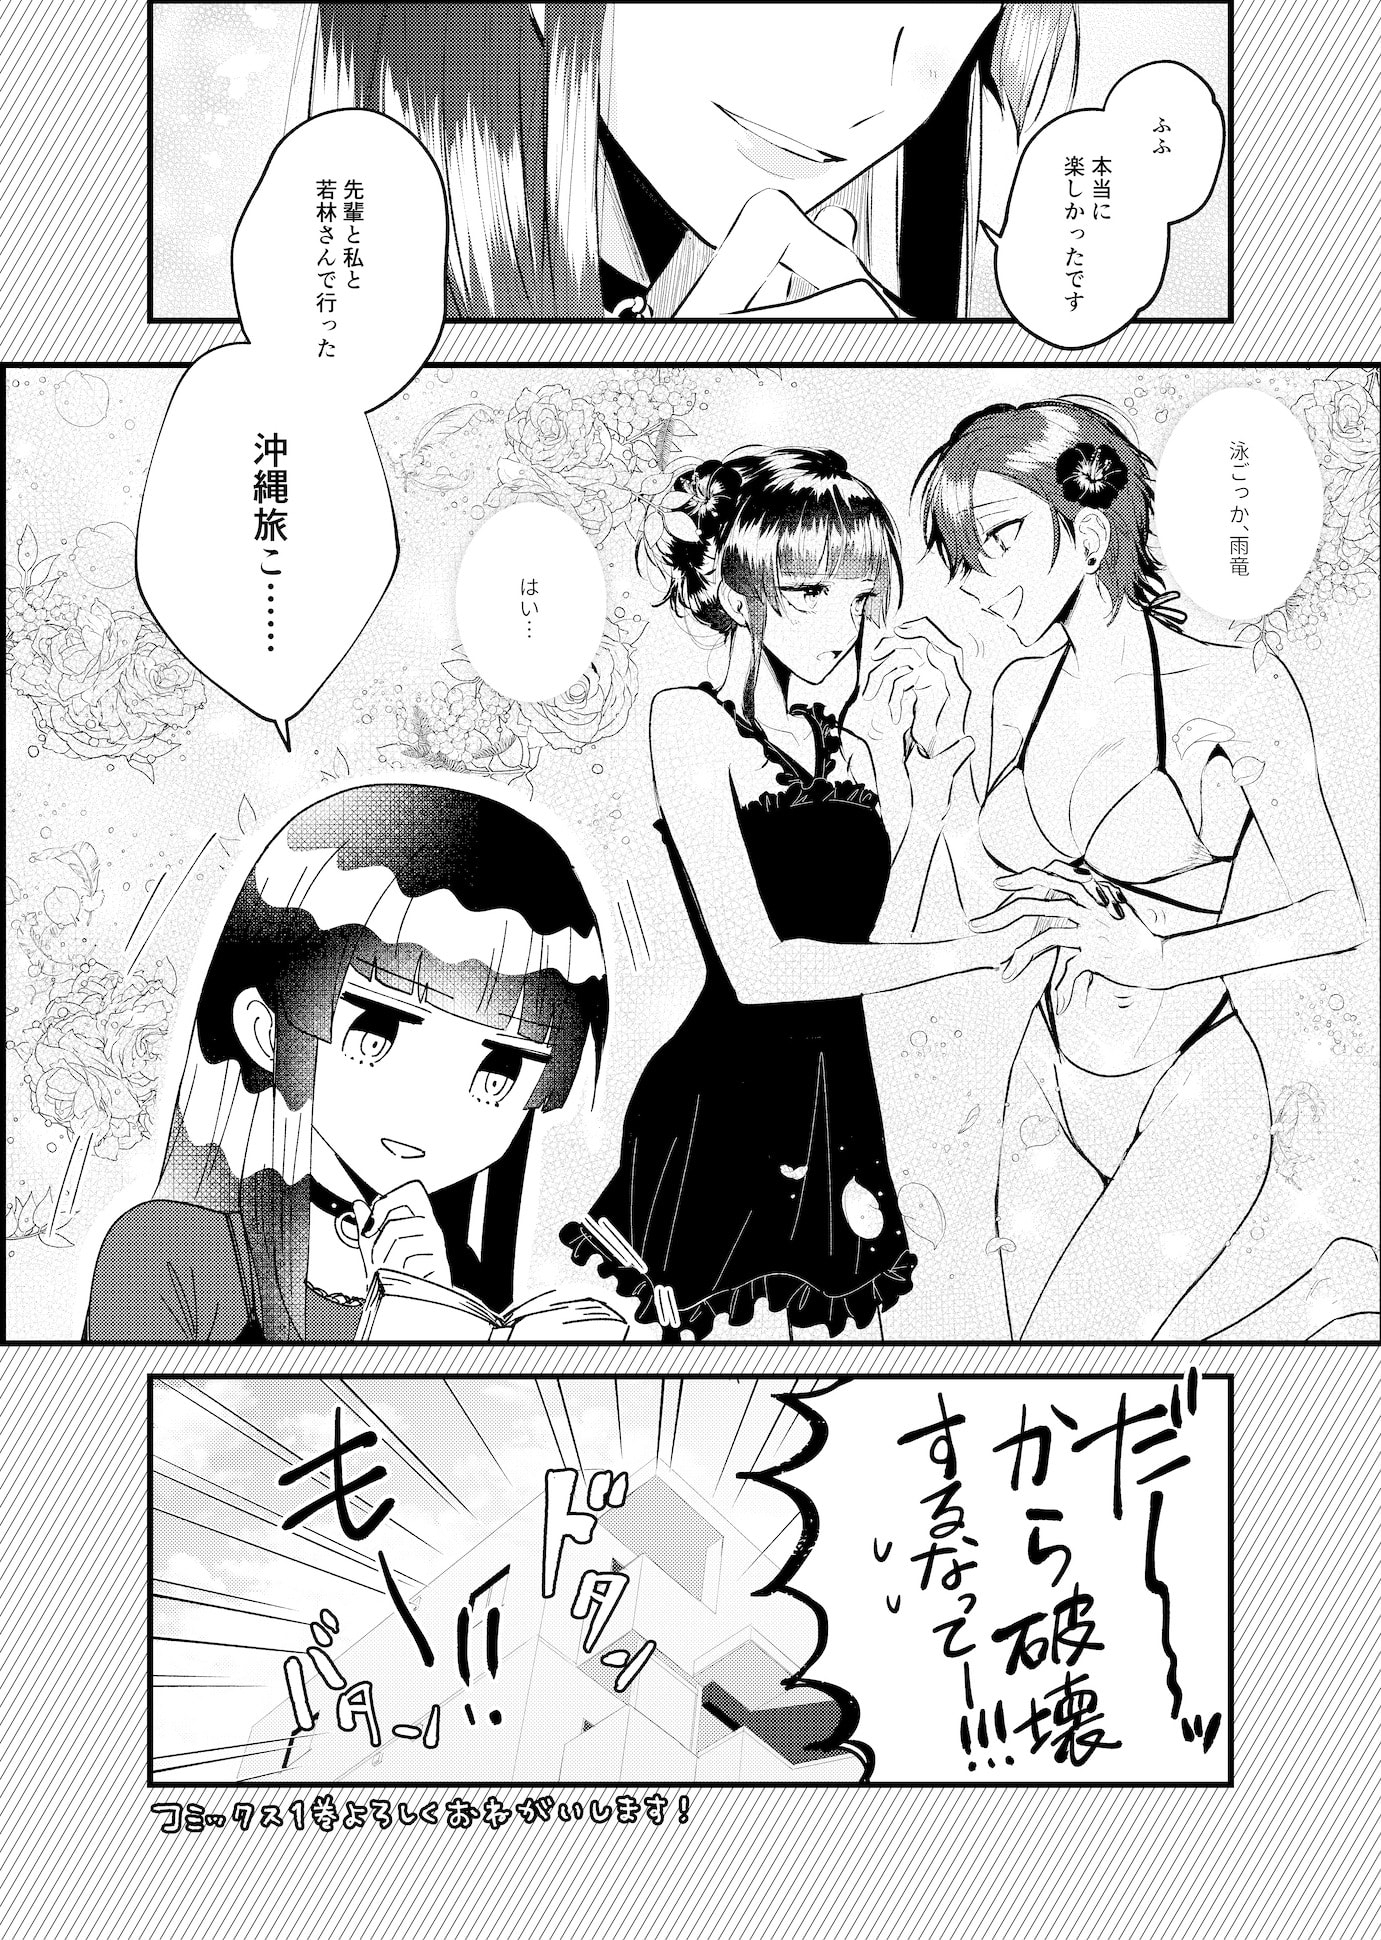 Kimama ni Tokyo Survive - Chapter 11.1 - Page 3